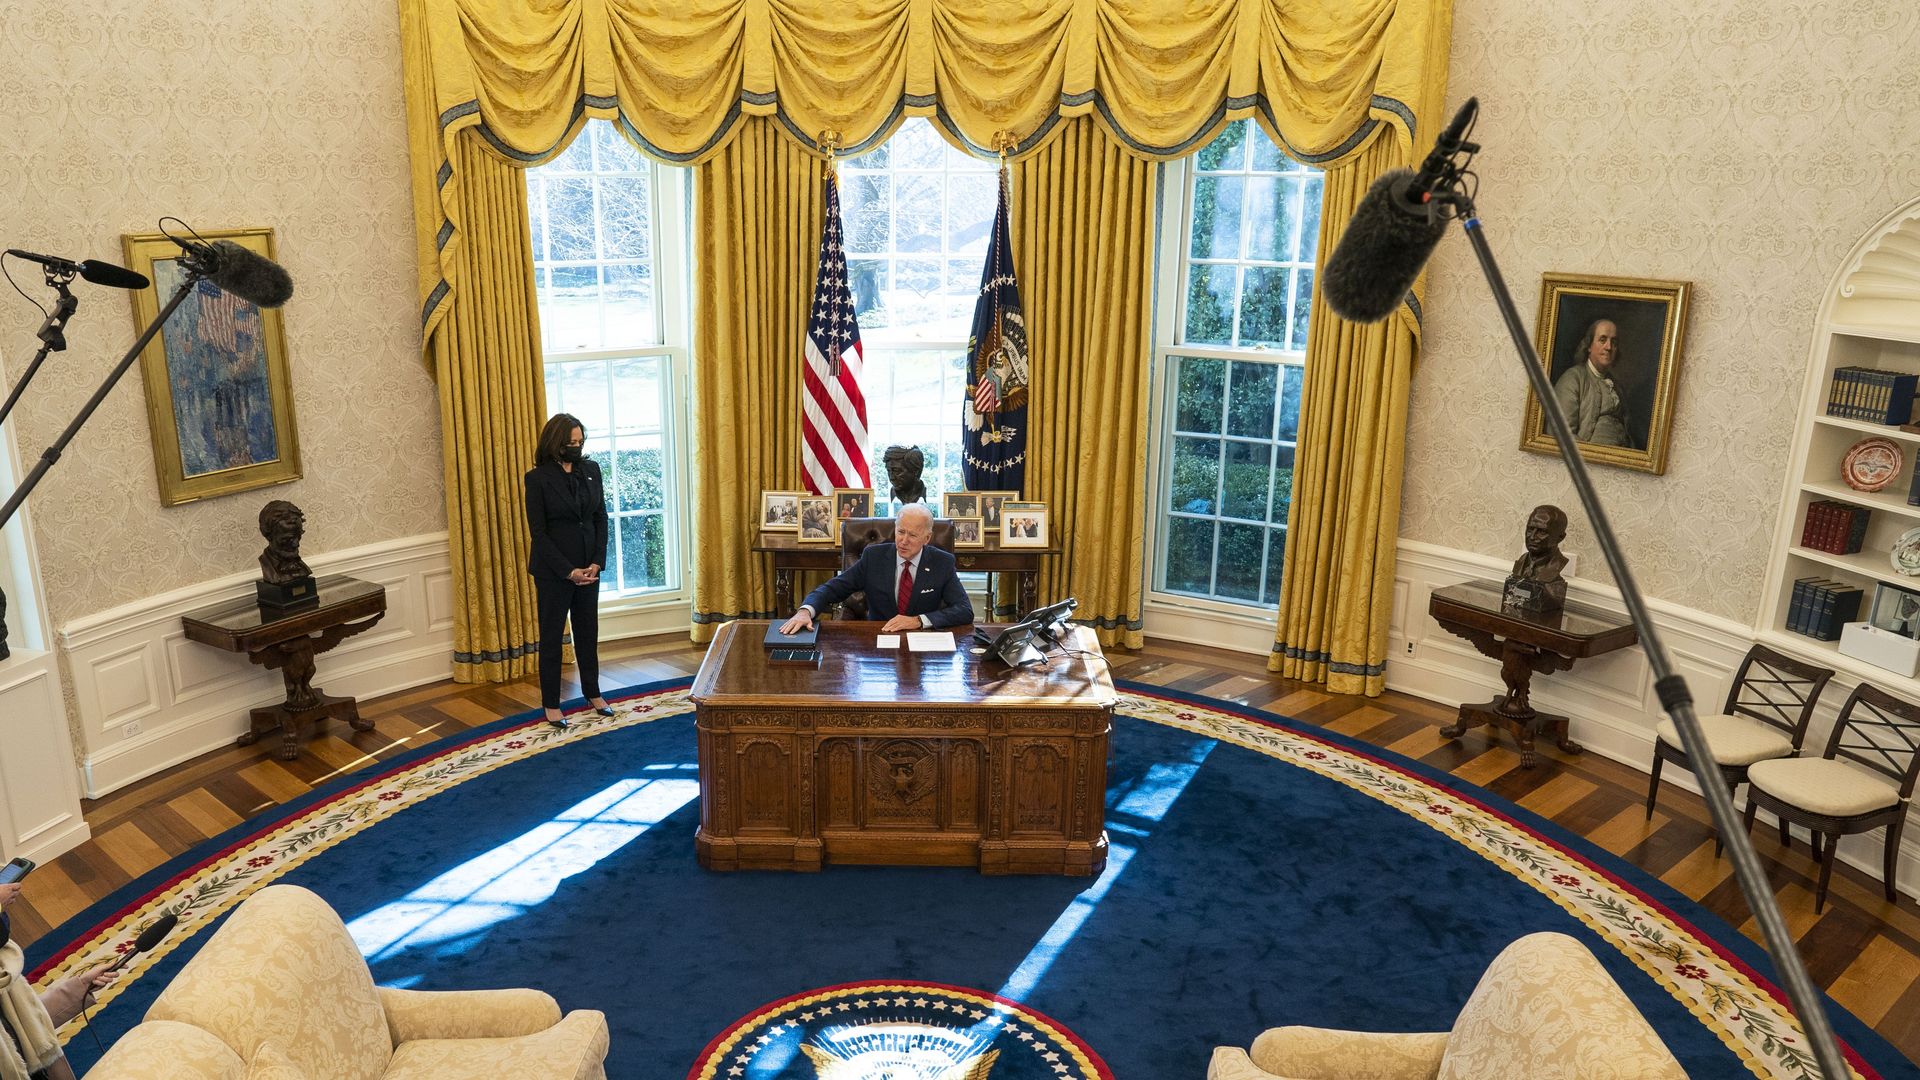 Joe Biden at the resolute desk with kamala harris in the oval office.